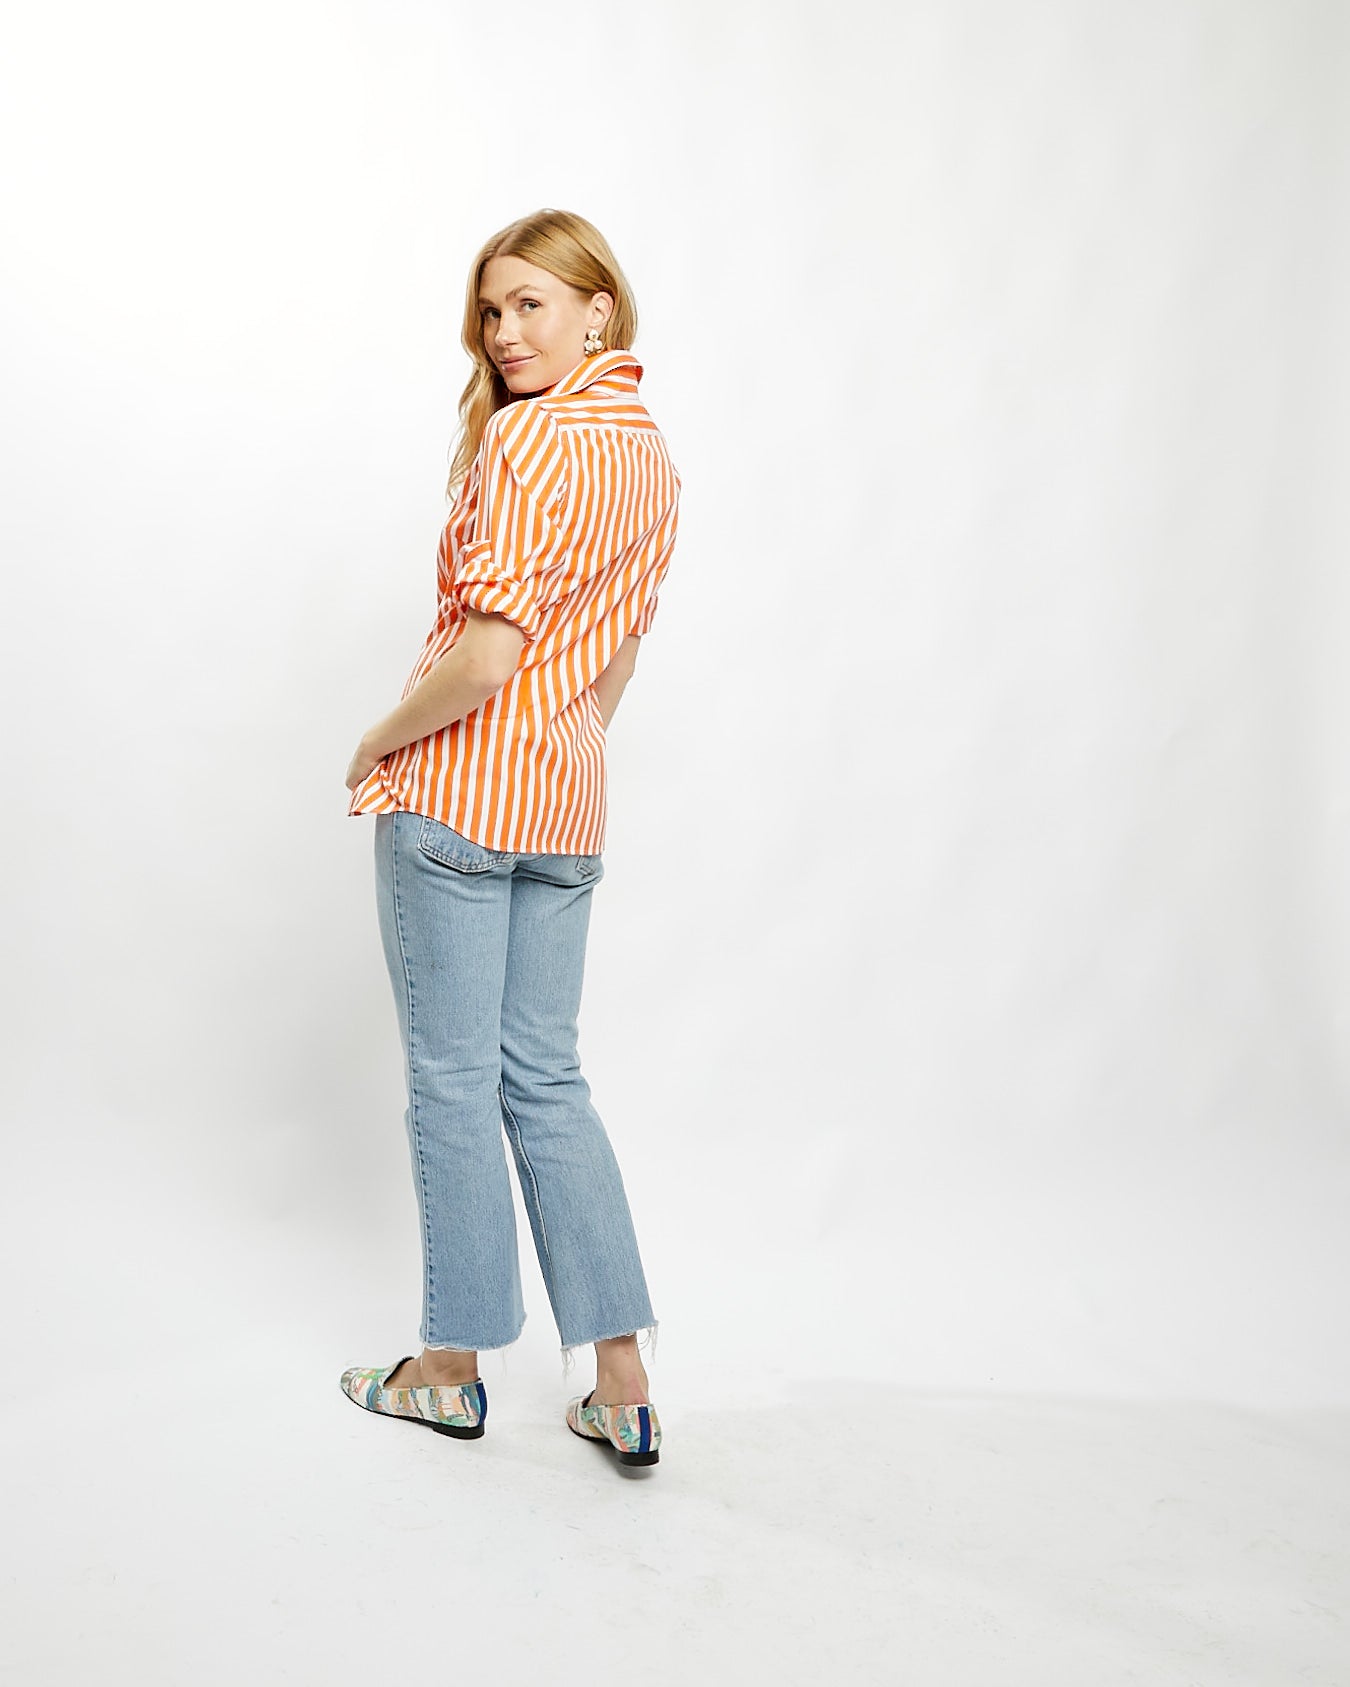 Fiona Blouse in Orange Bold Stripe